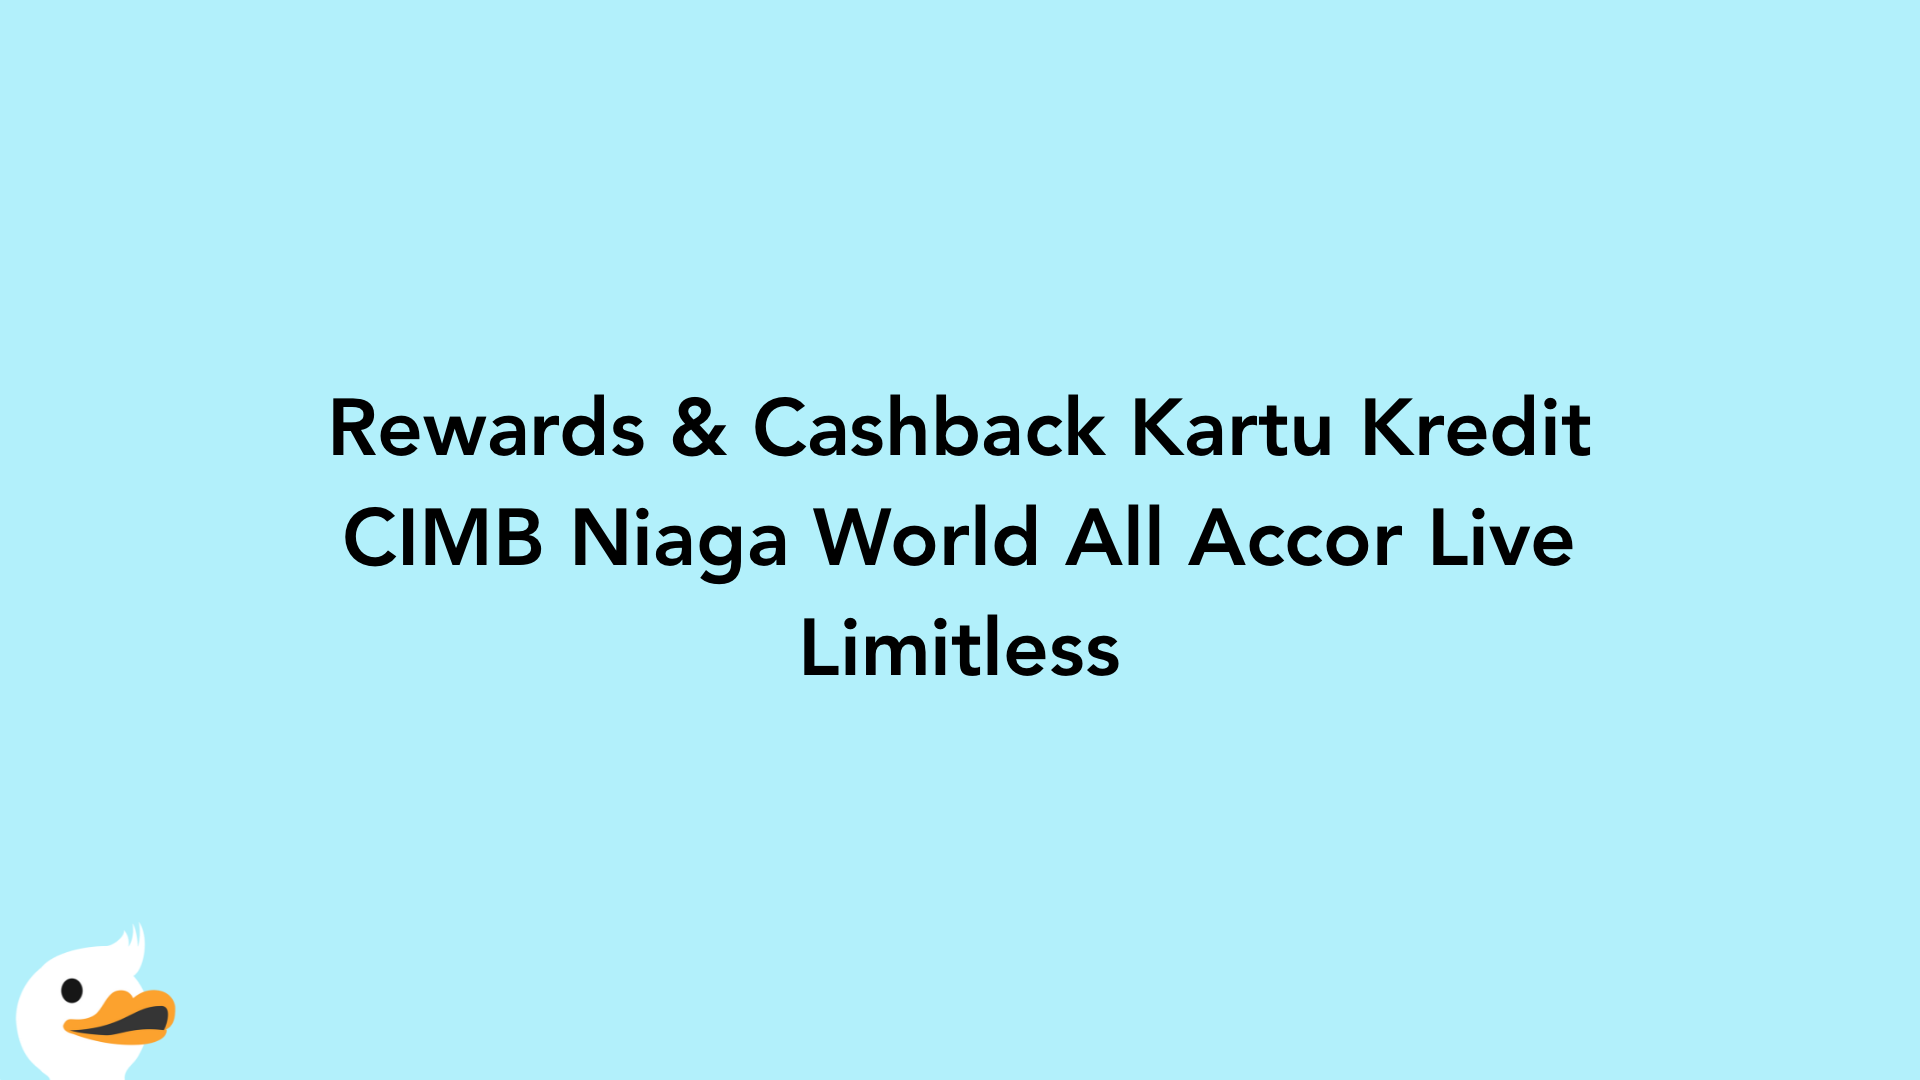 Rewards & Cashback Kartu Kredit CIMB Niaga World All Accor Live Limitless